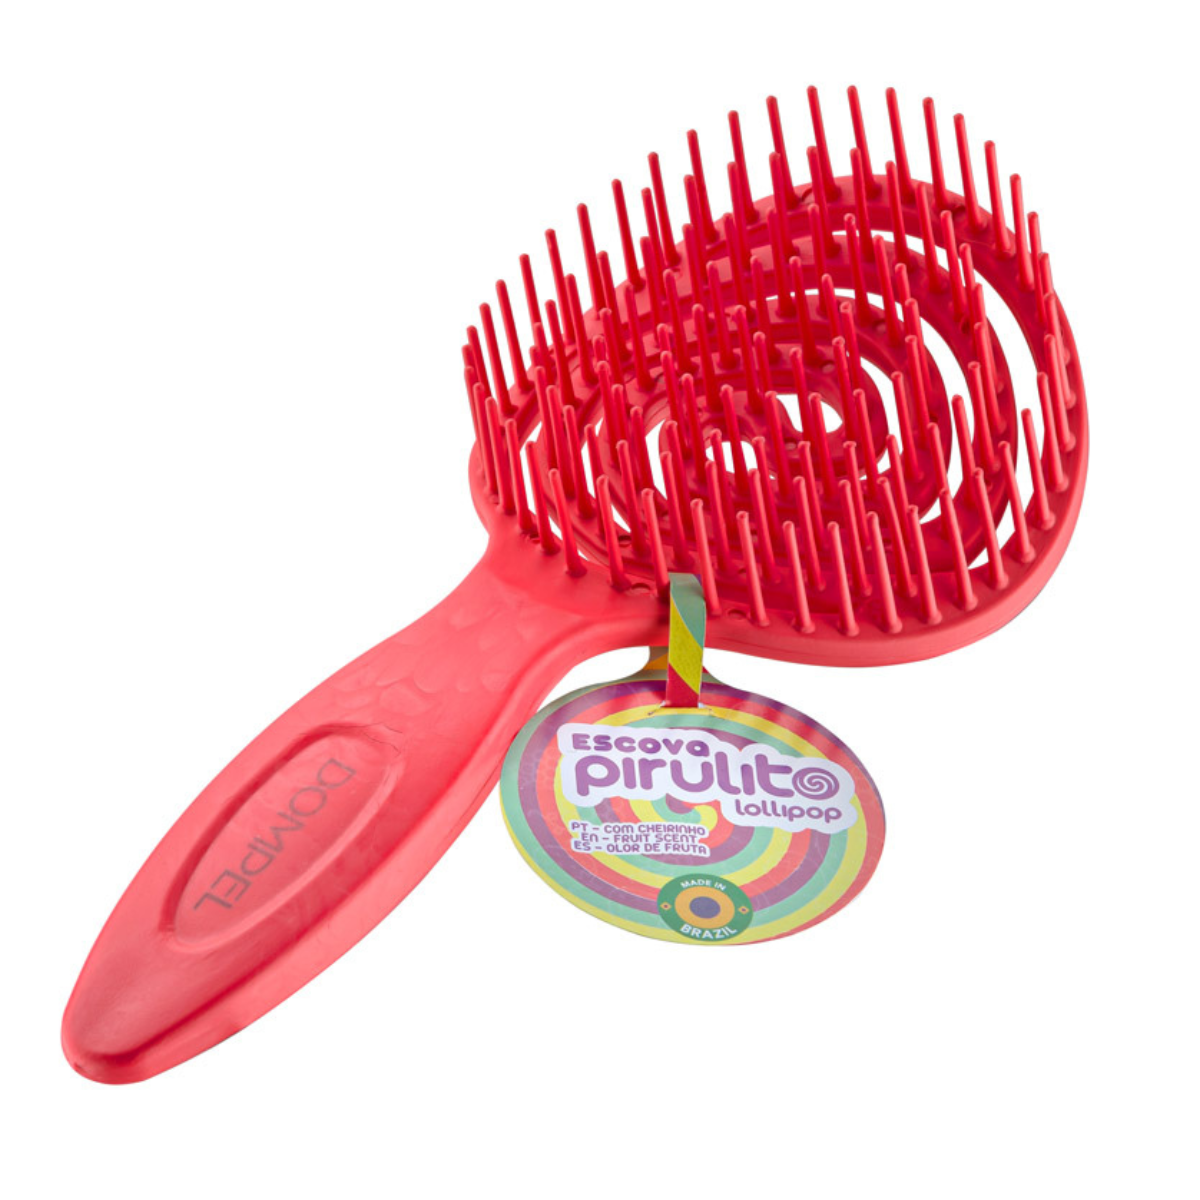 Dompel Hair Brush Pirulito, antistatic brush, 4 Pcs (Strawberry, Pineapple, Grape, Green apple) Model 4018 - depilcompany